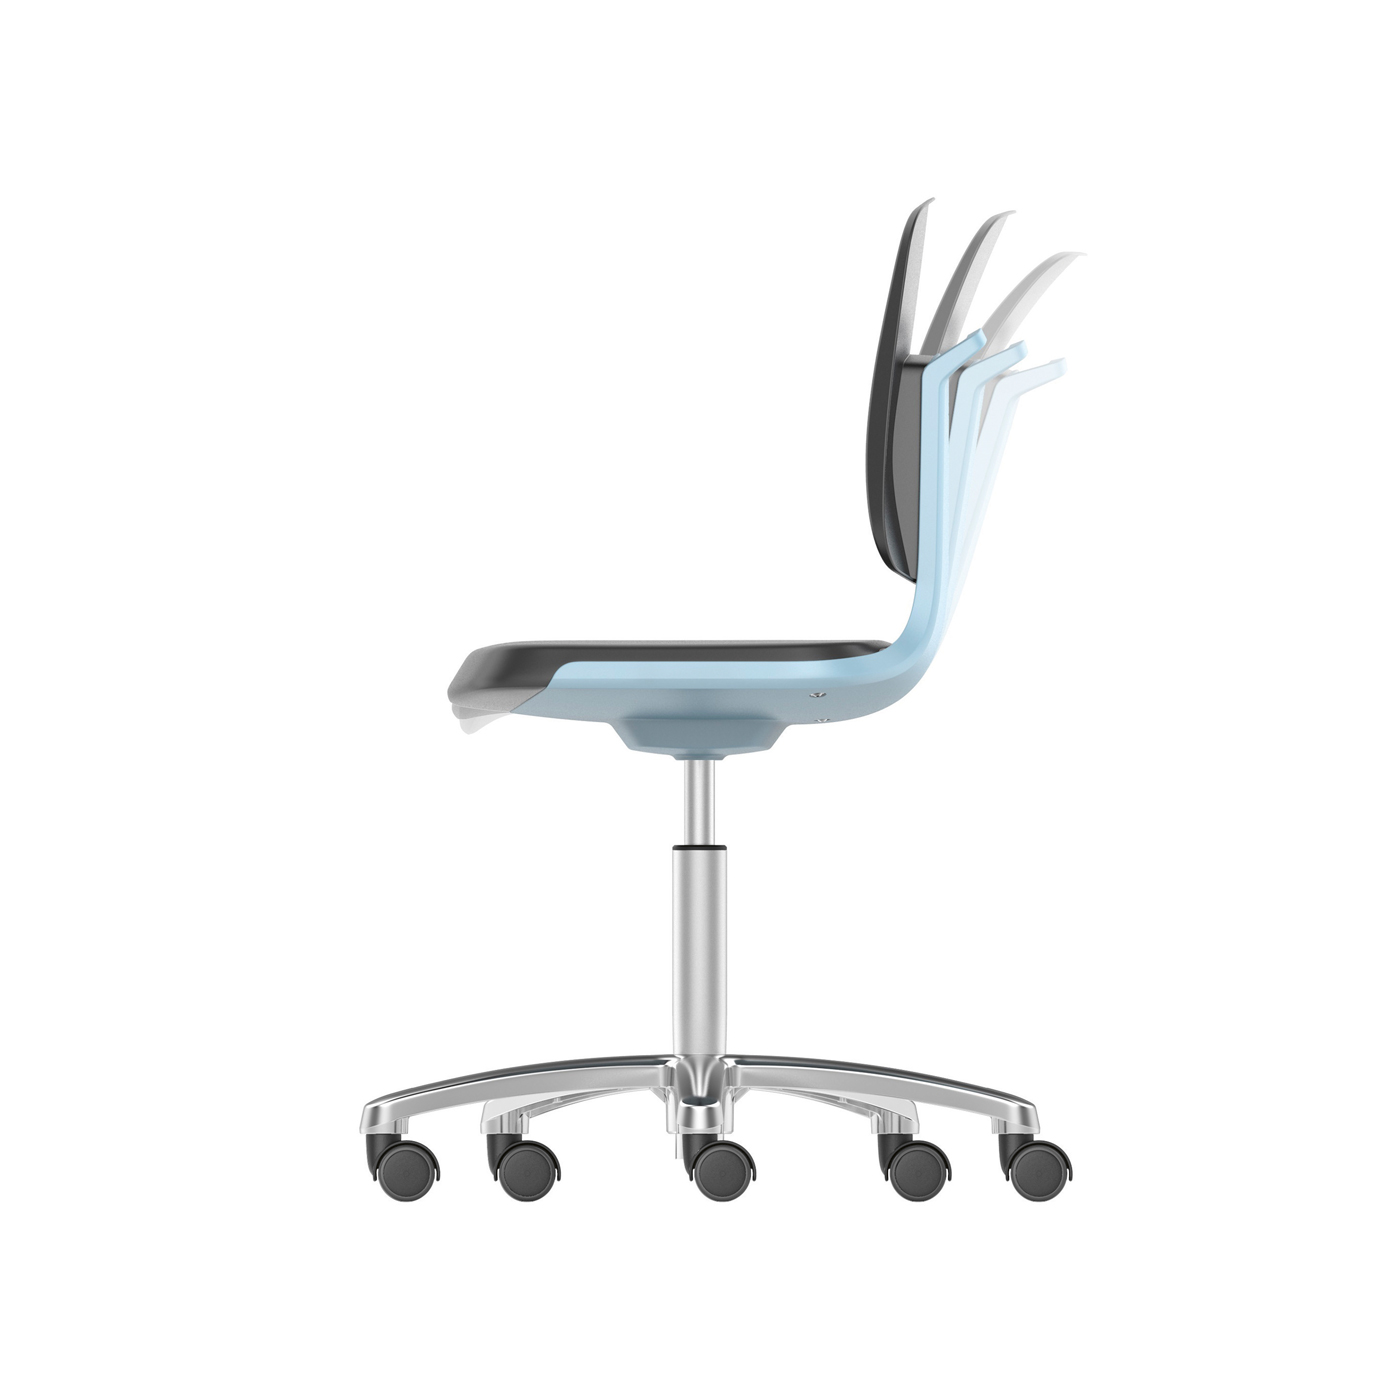 Labsit Swivel Chair, White/Black - 1 piece